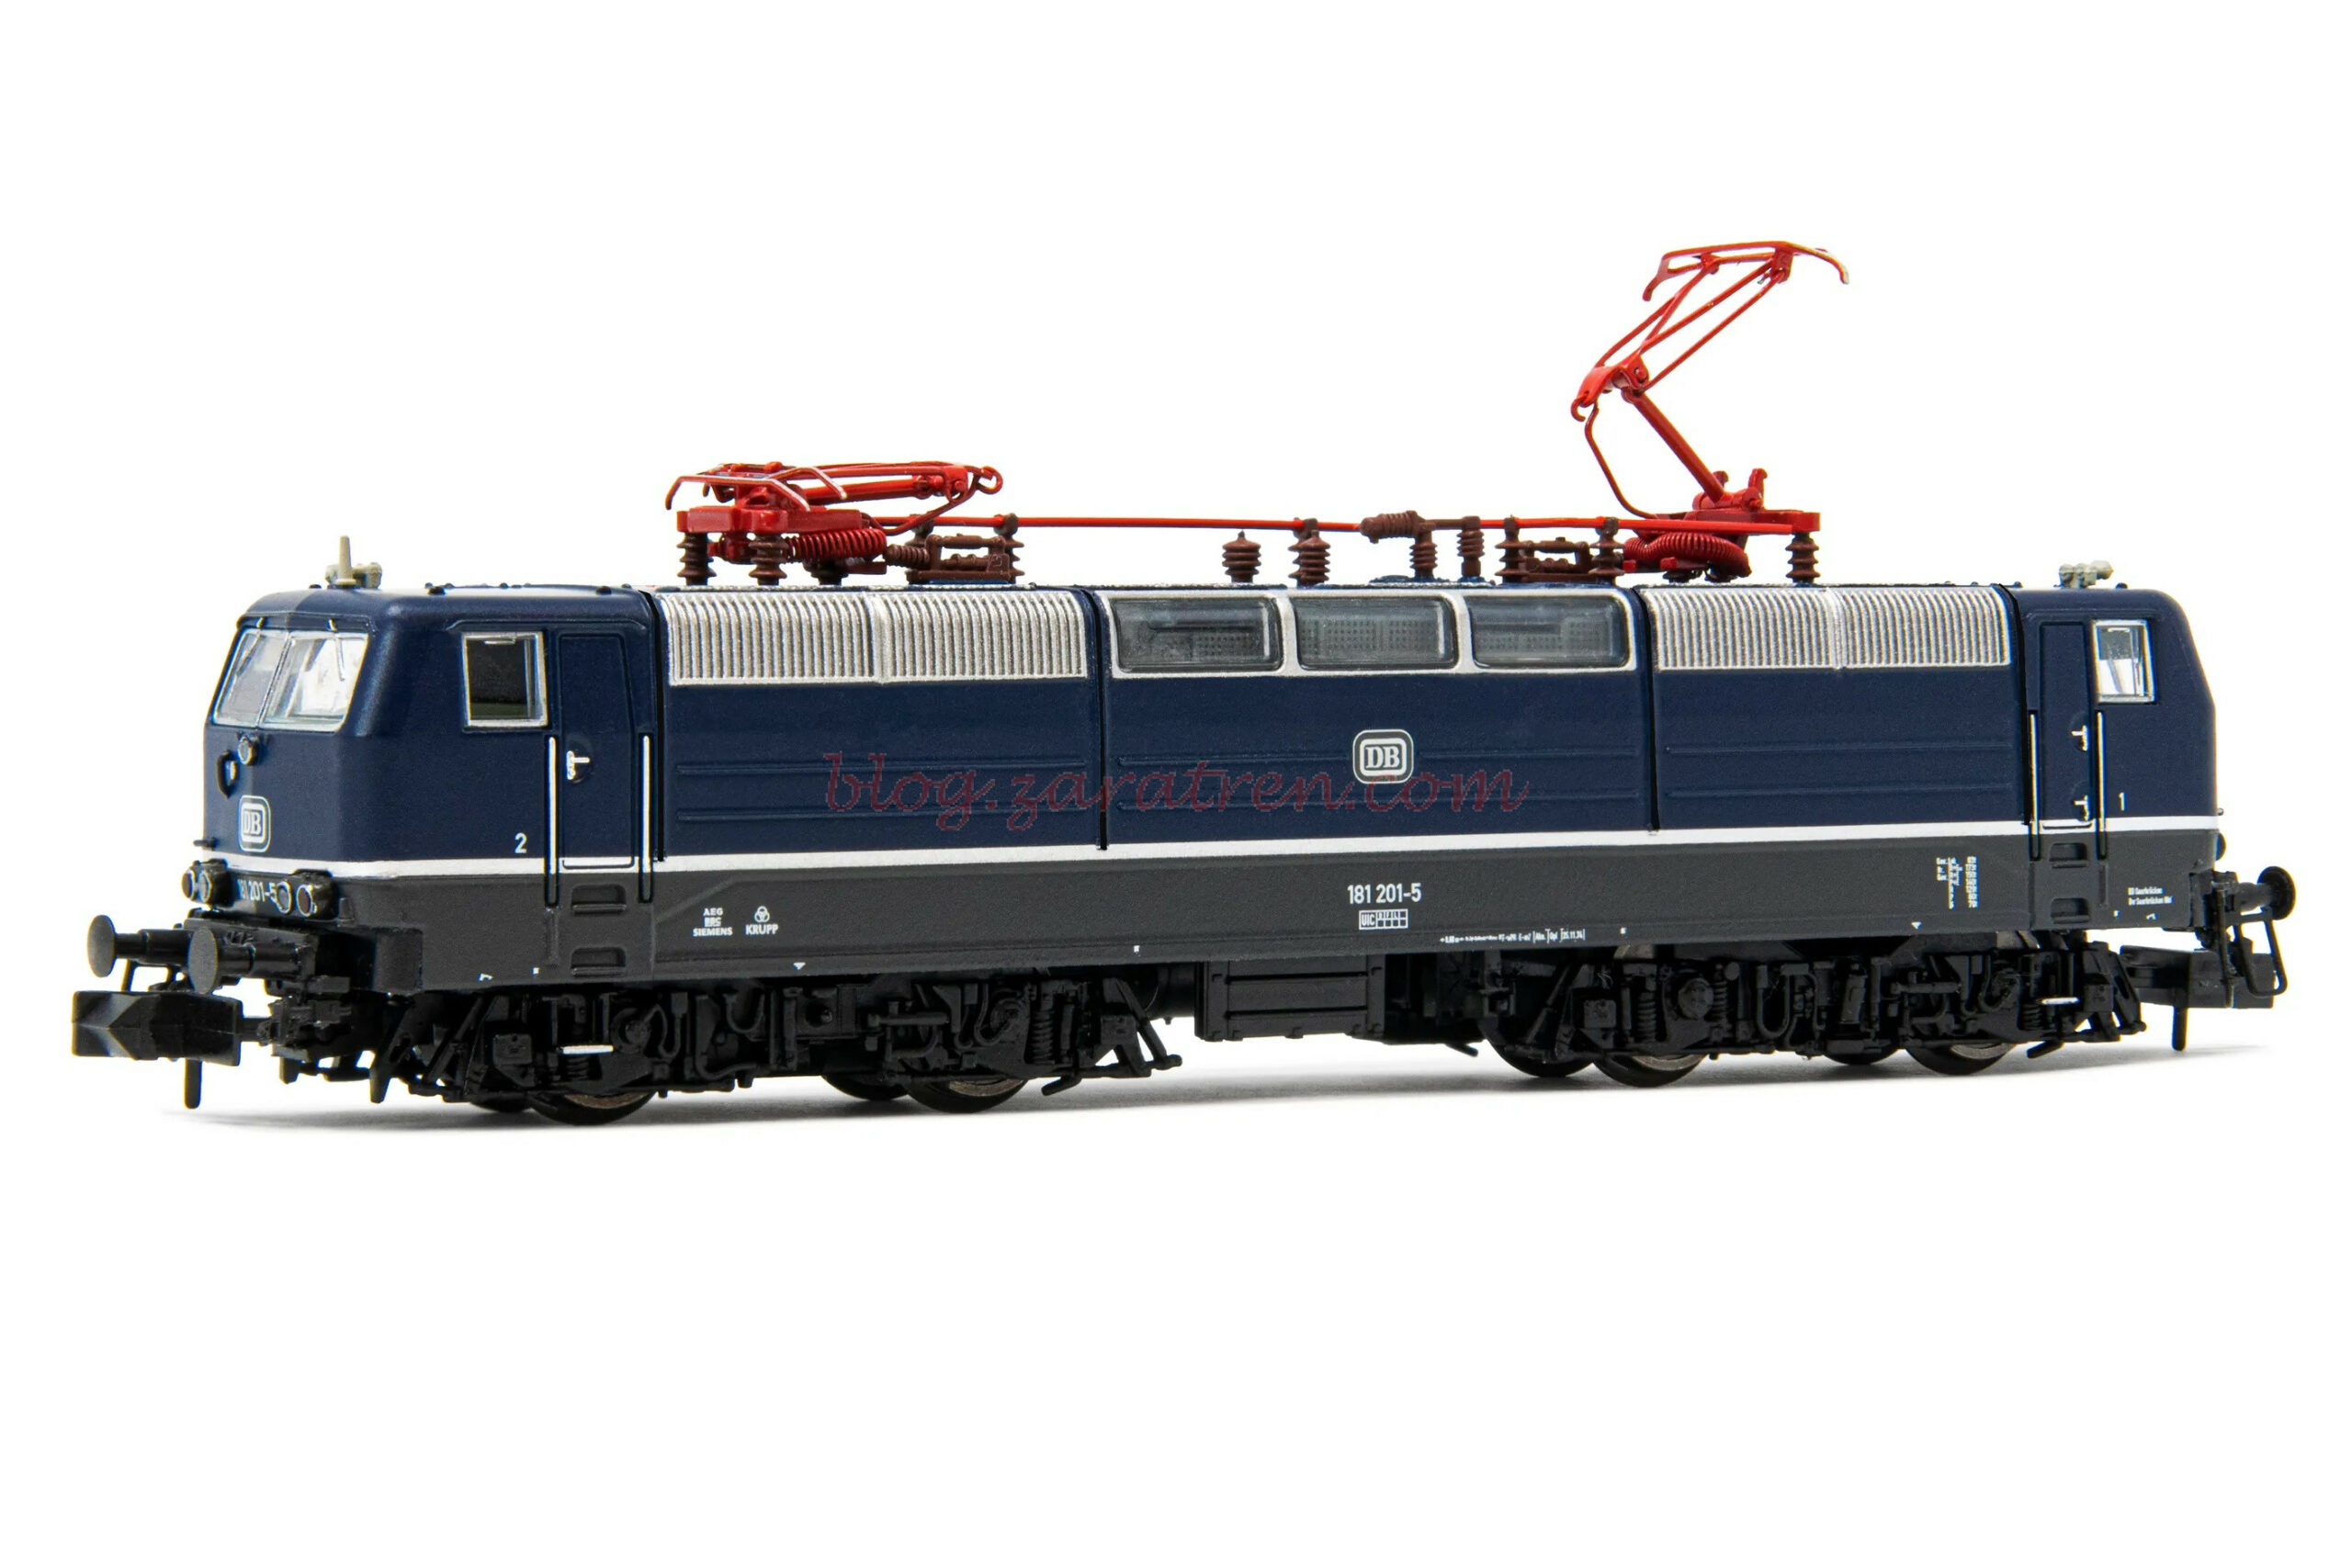 Arnold – Locomotora Electrica clase 181.2 Dec. Azul, Epoca IV, Escala N, Analogica. Ref: HN2491